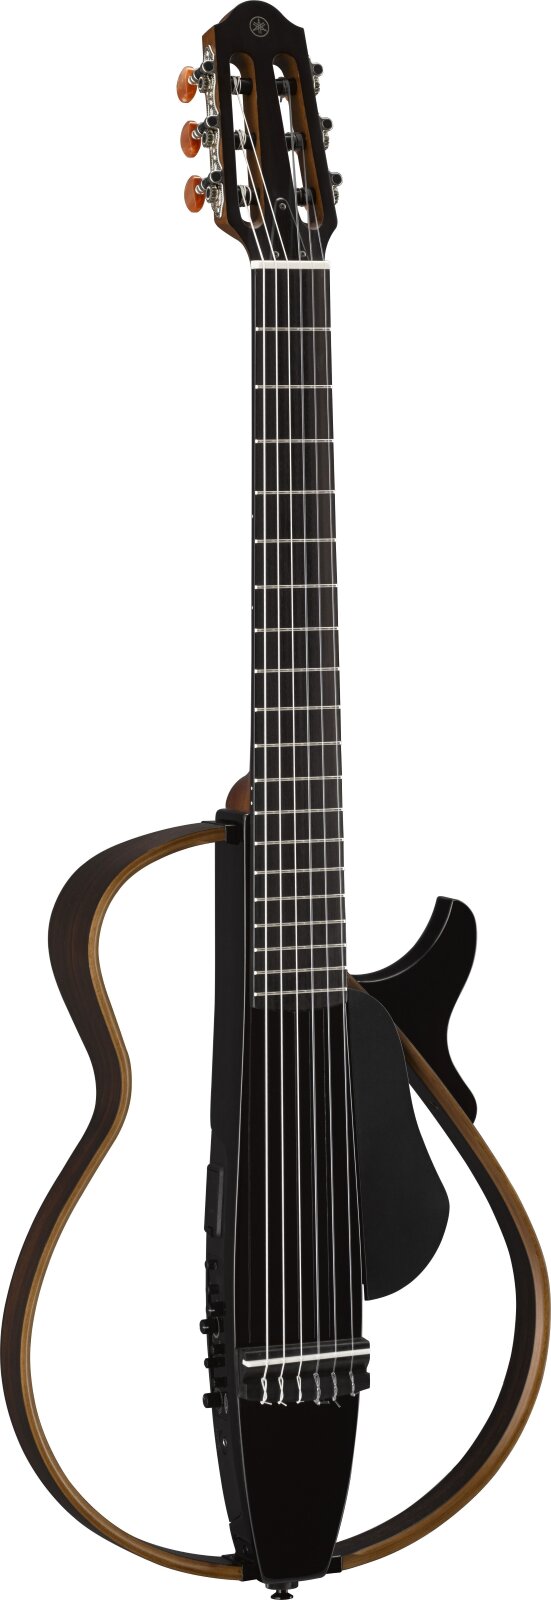 Yamaha Silent Classical Guitar - SLG200N Translucent Black : photo 1